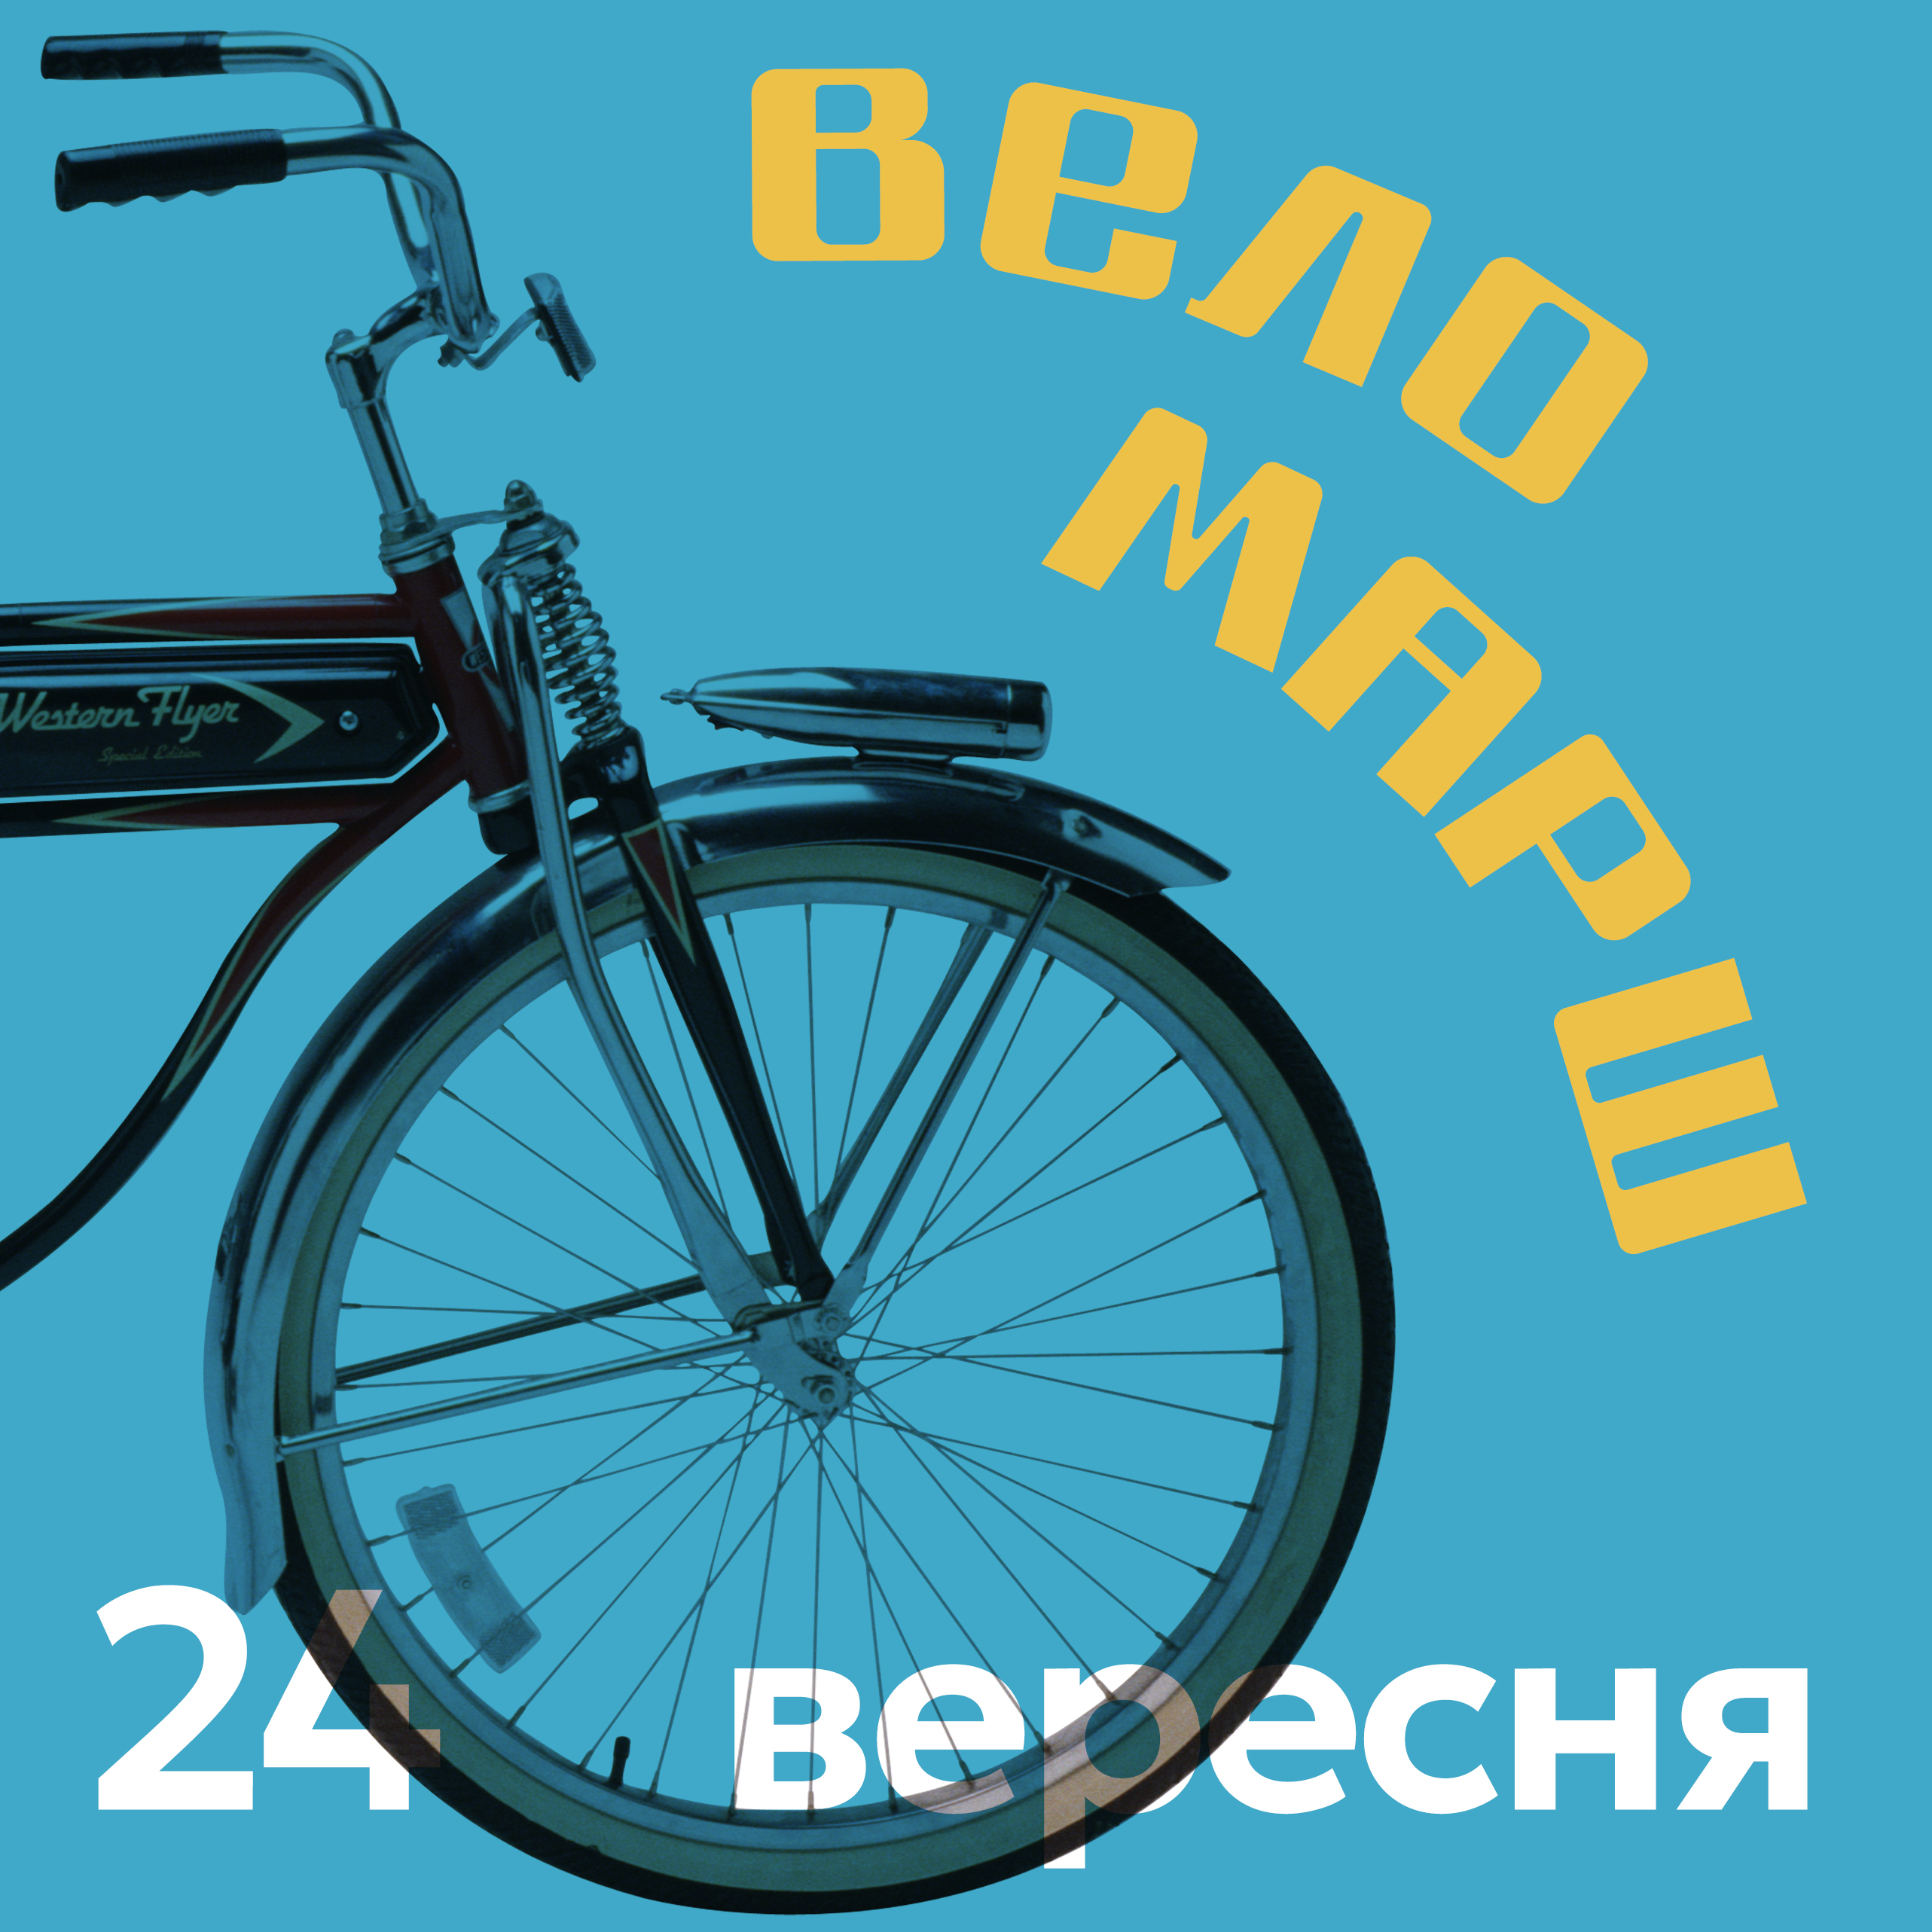 Реєстрація на веломарш / Registration for the bike march